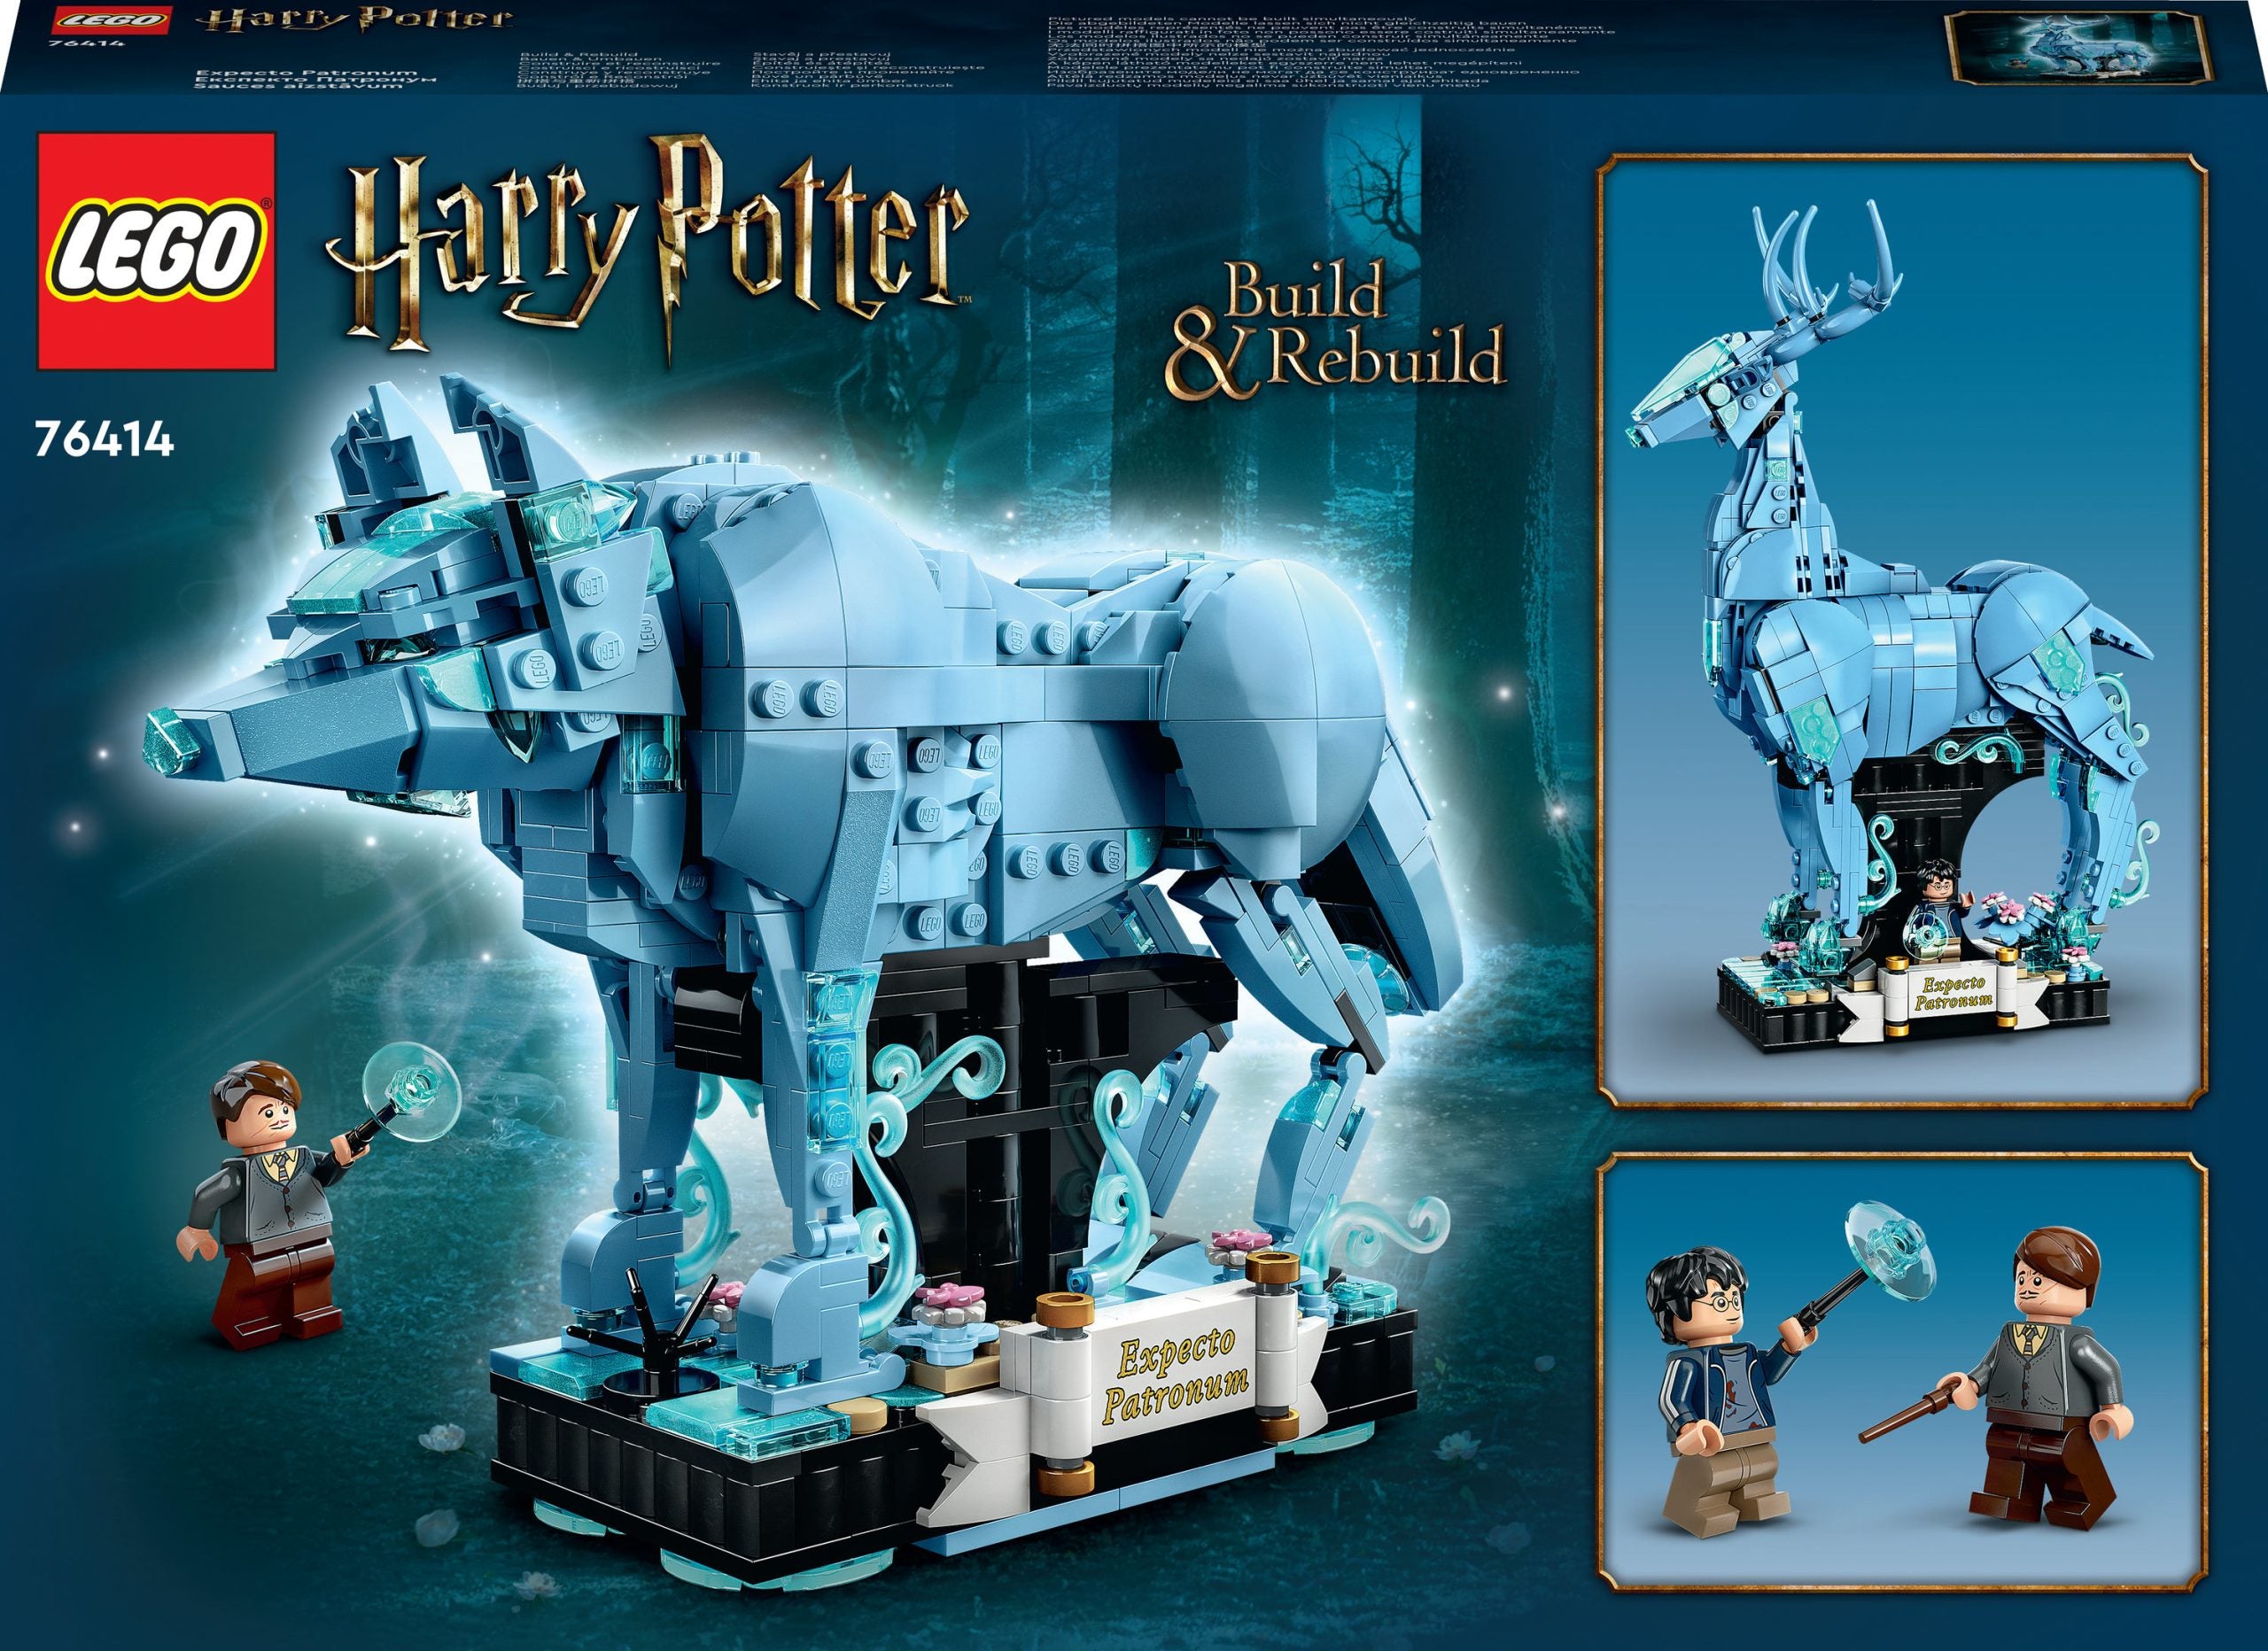 76414 - LEGO Harry Potter - Expecto Patronum